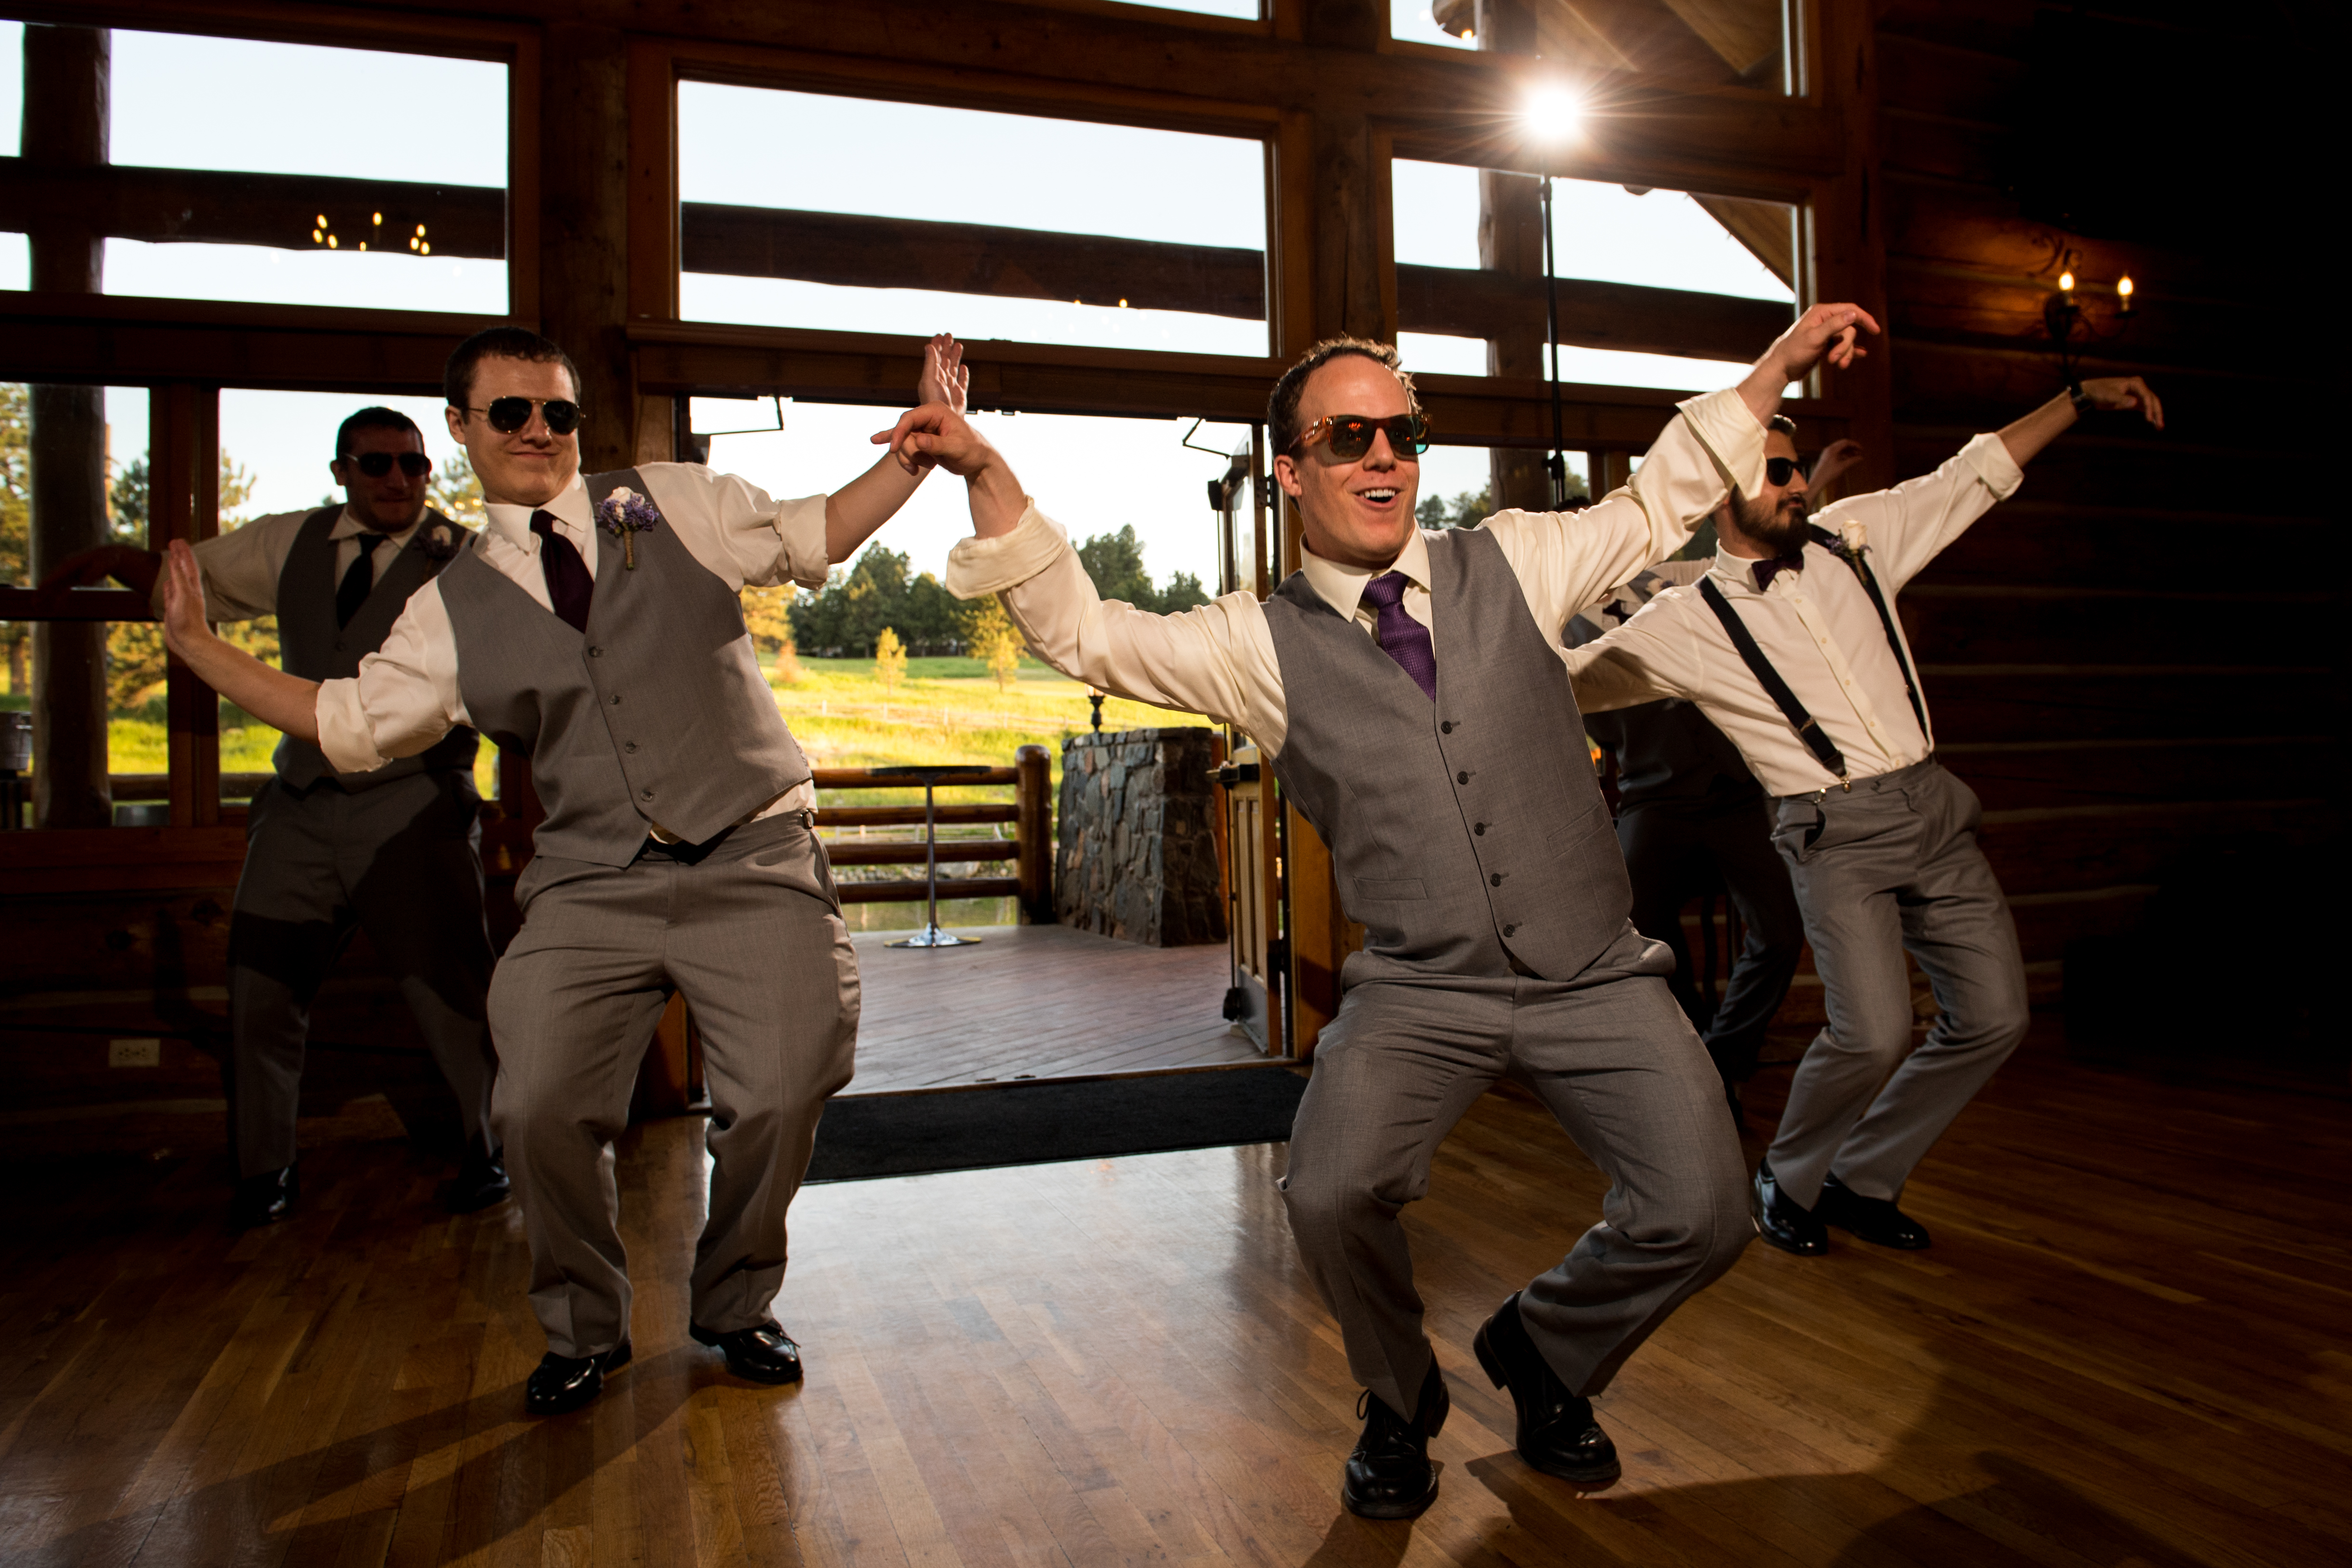 Evergreen Lake House wedding pictures of groomsmen dancing